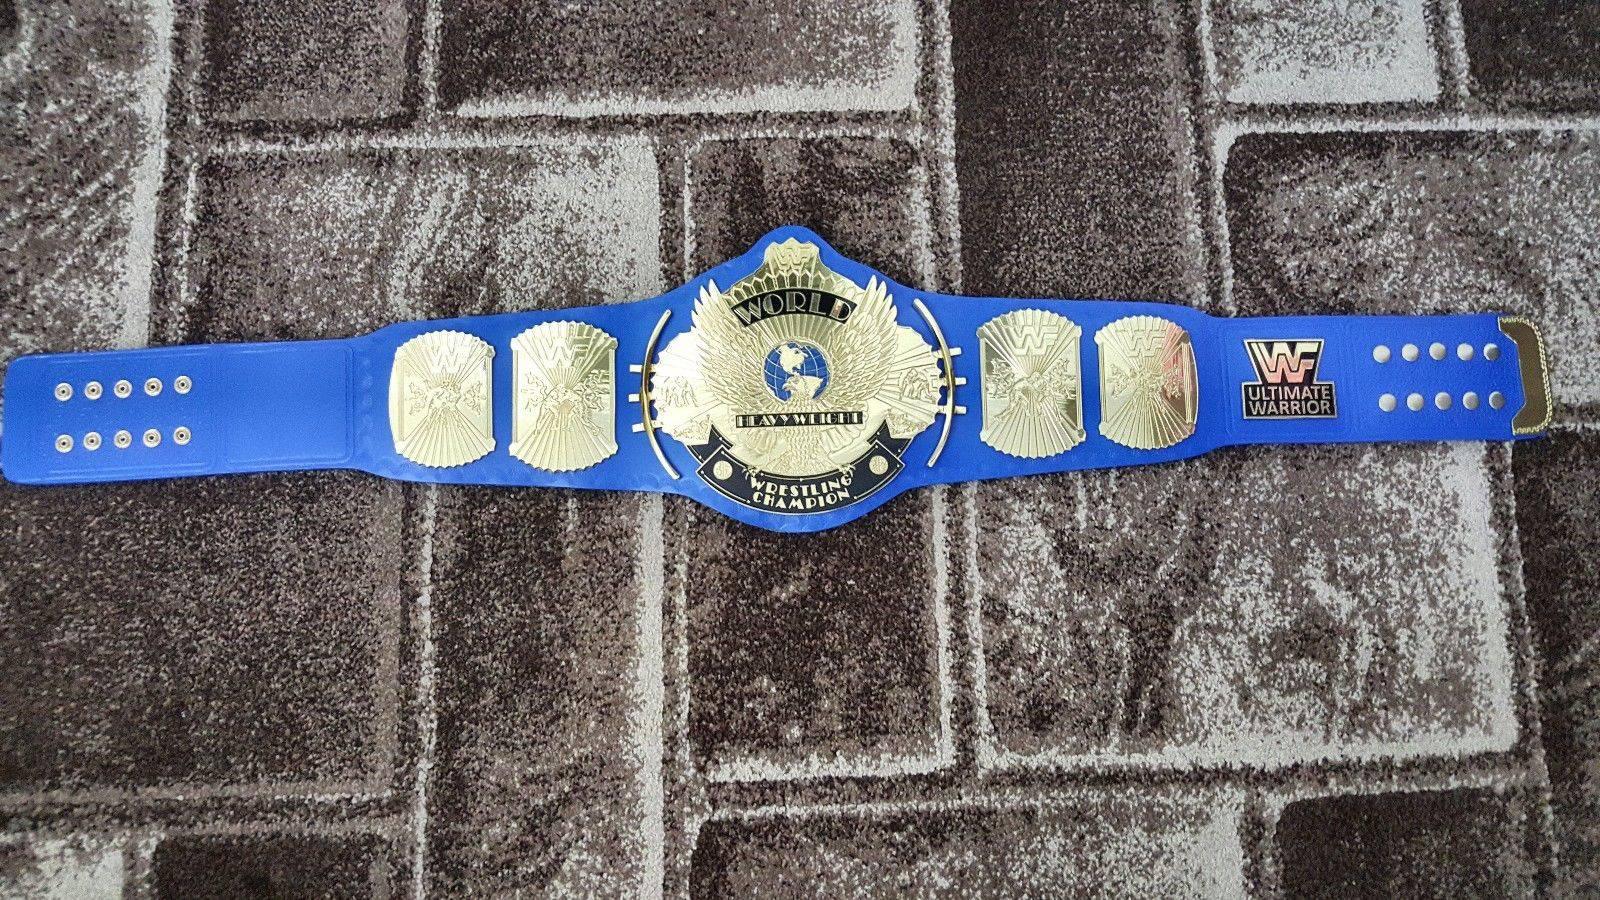 WWF ULTIMATE WARRIOR WINGED EAGLE Brass Championship Title Belt - Zees Belts